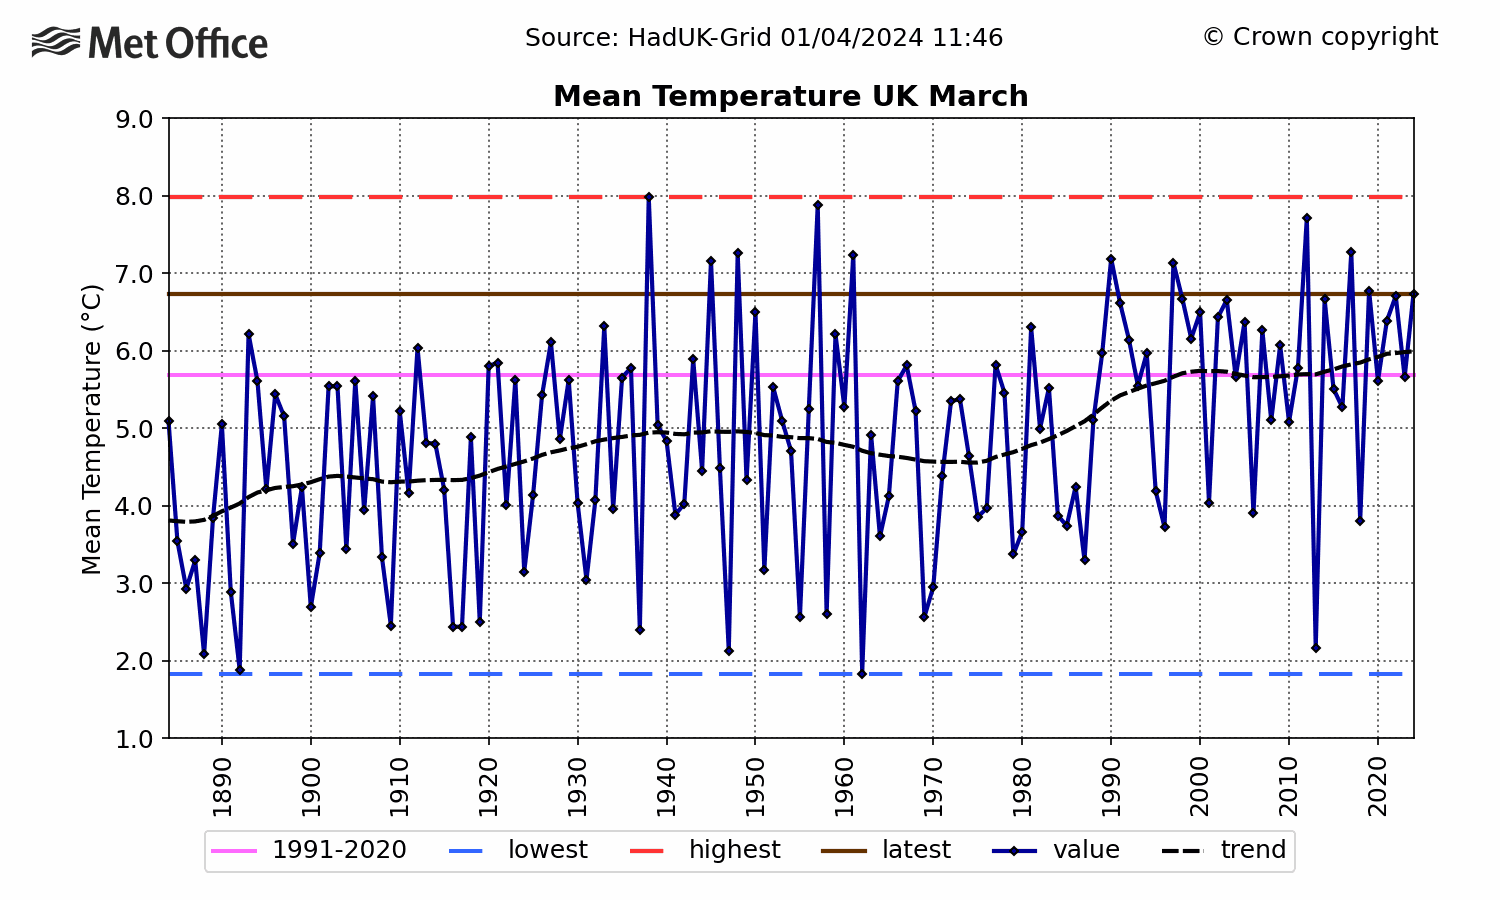 UK Mean temperature - March